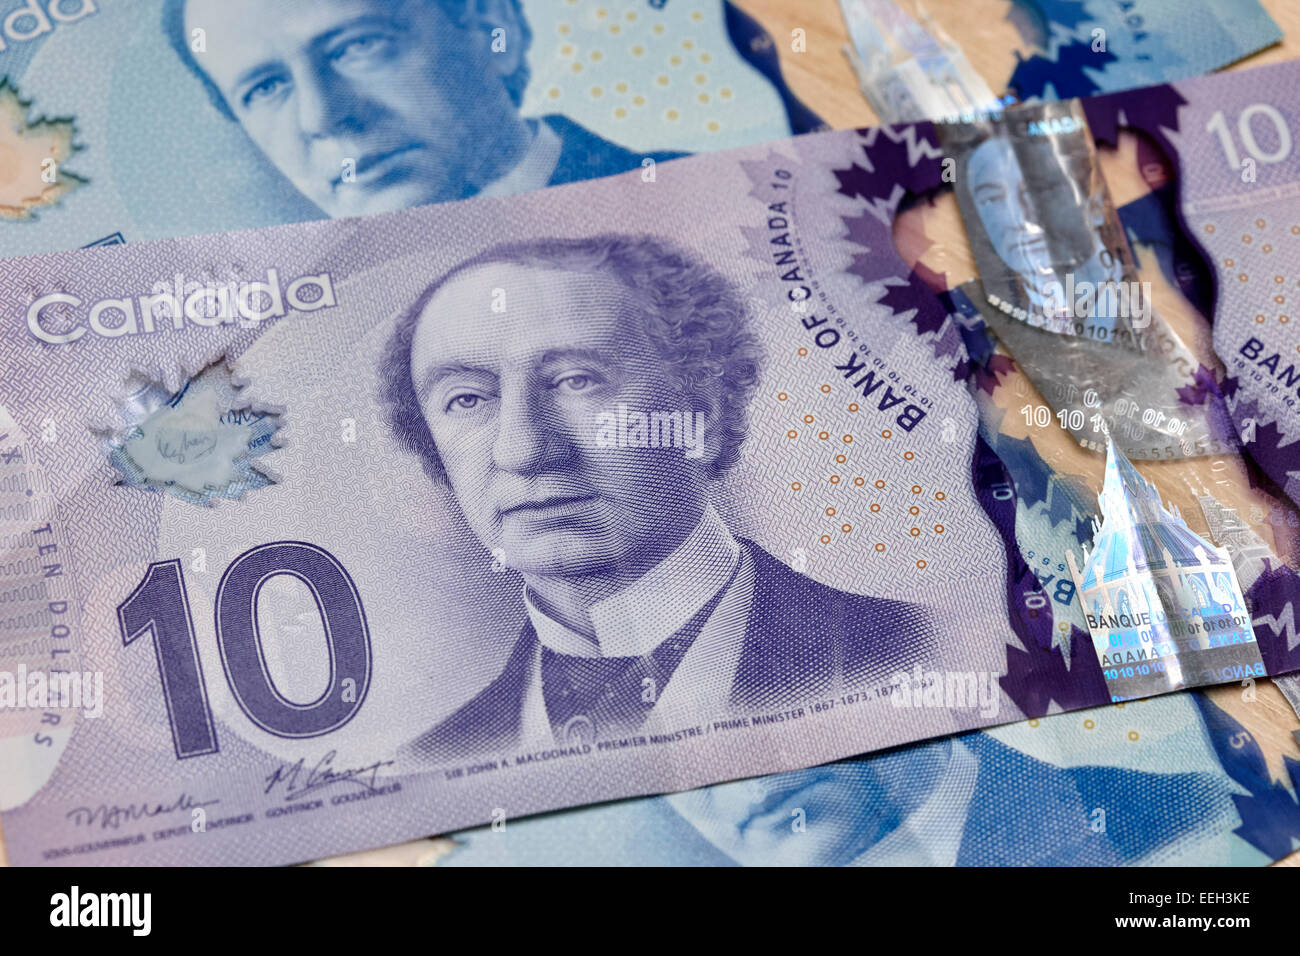 sir john macdonald on the canadian 10 dollar note Stock Photo